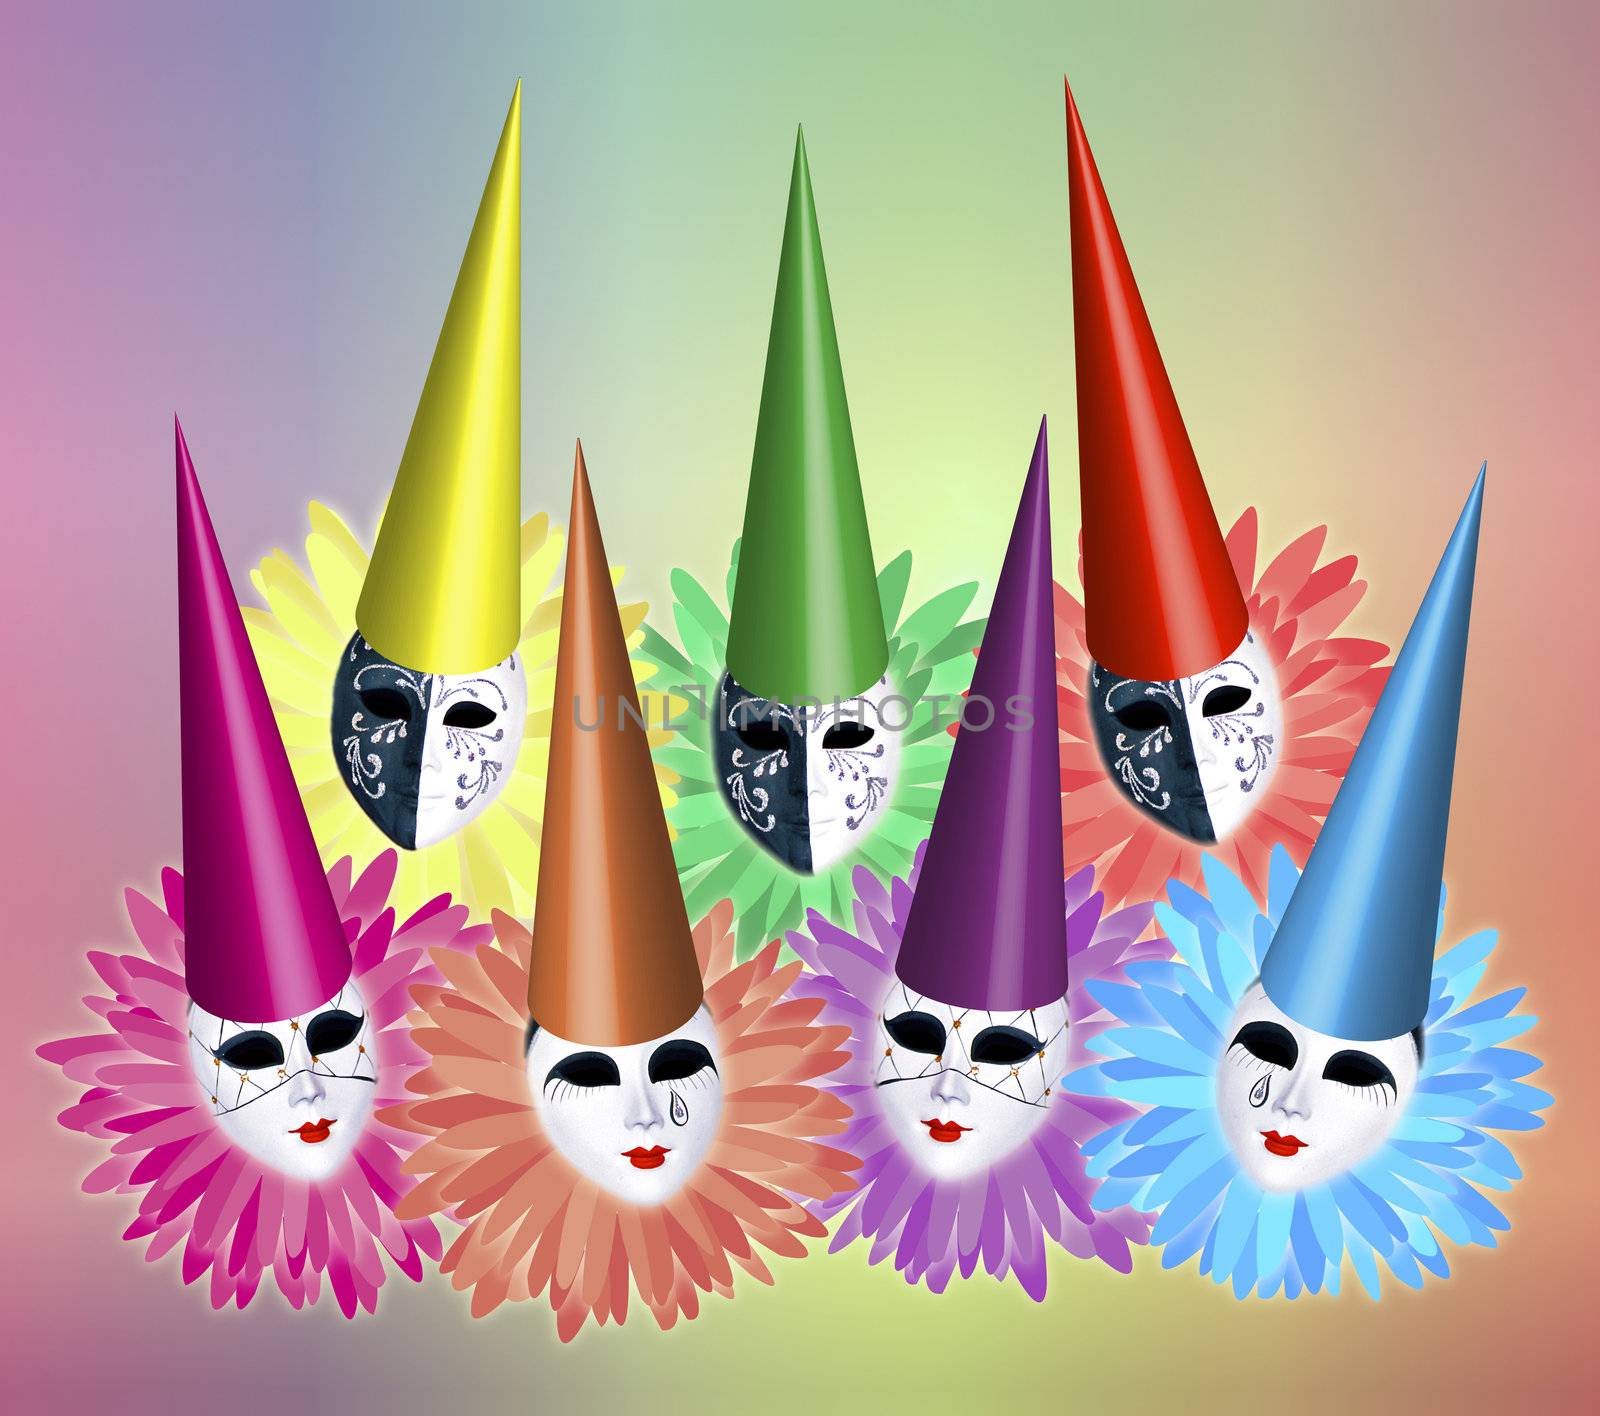 Carnival Masks by srnicholl